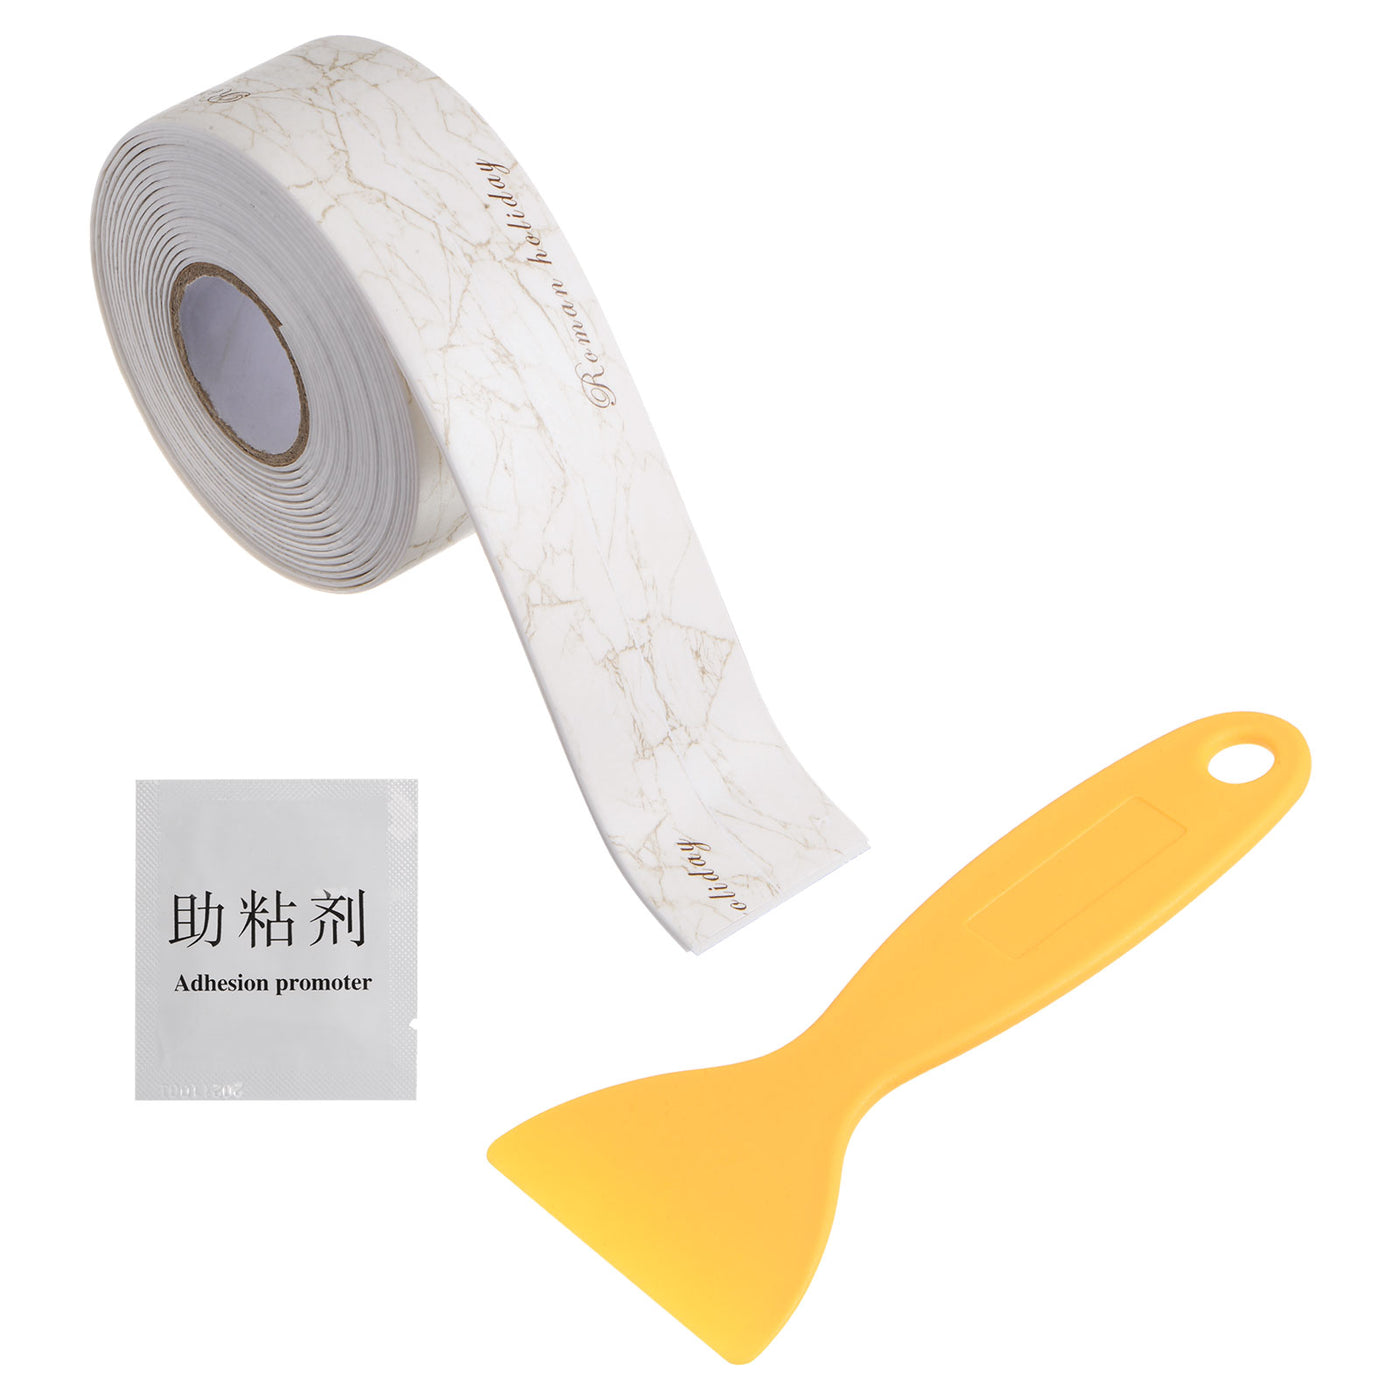 Harfington Caulk Tape Sealant Strip 1.5"W x 10.5'L Decorative Sealant Tape w Sealing Tool